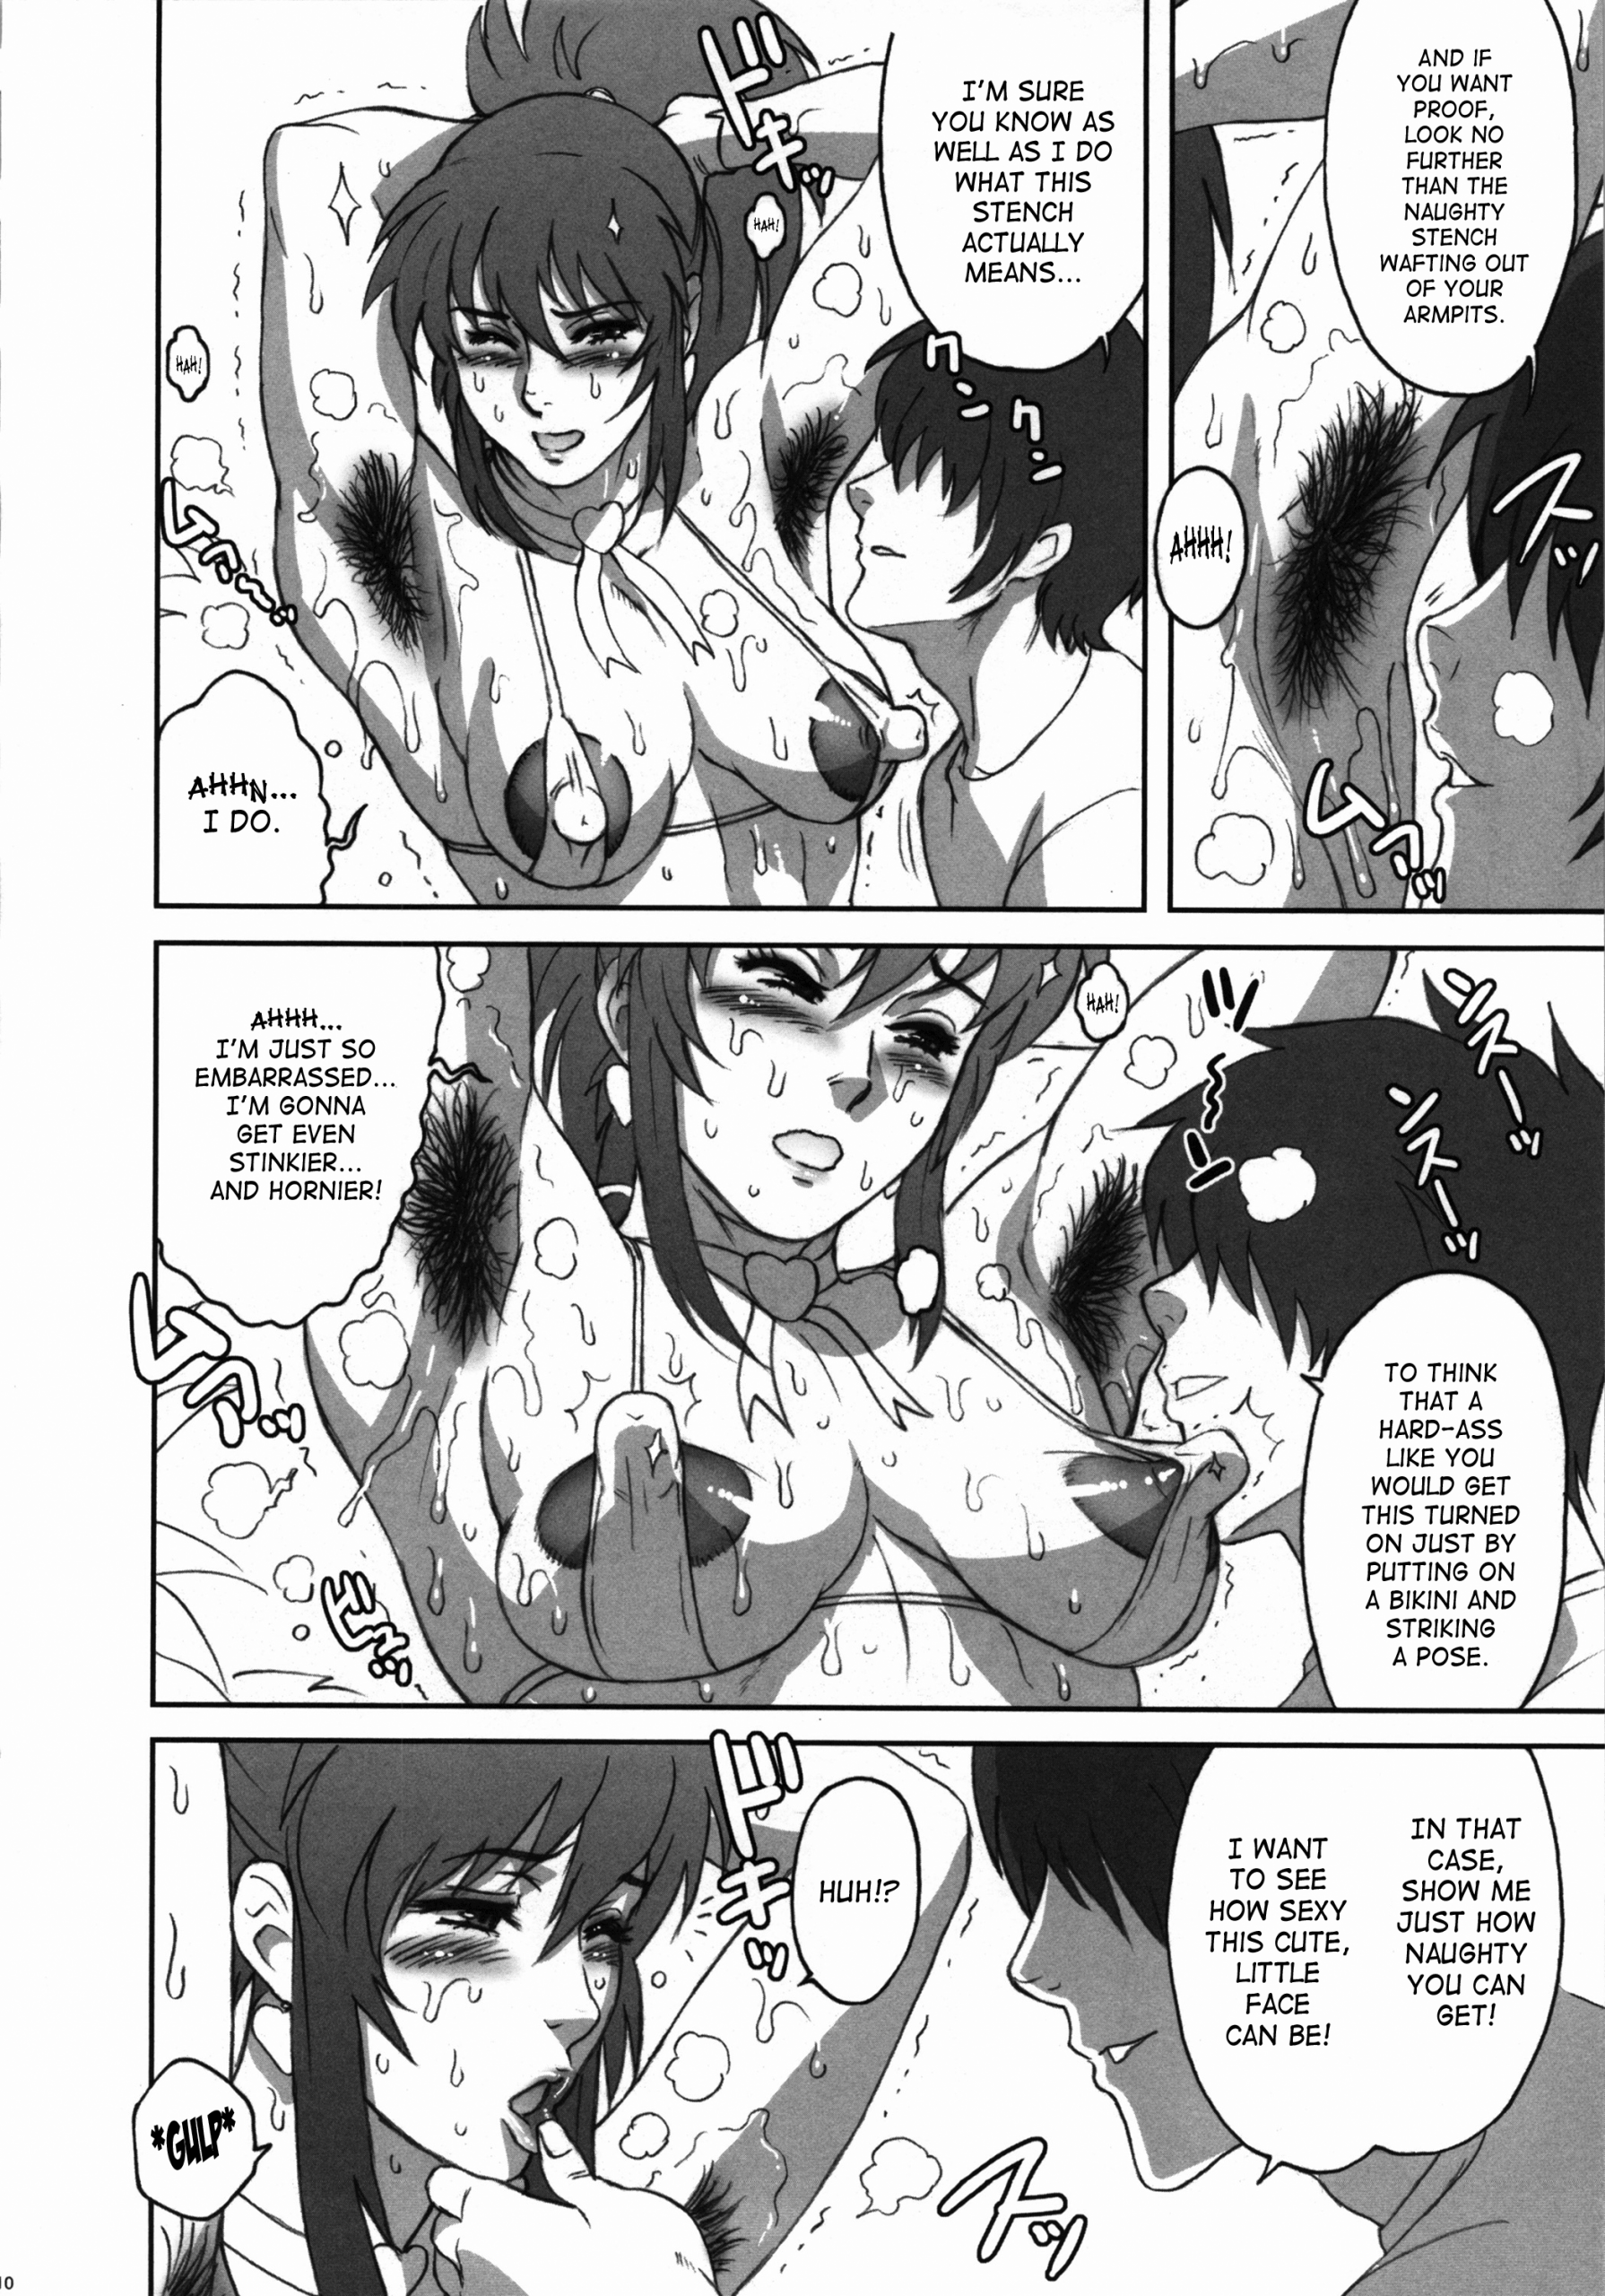 NIPPON PRACTICE 3 hentai manga picture 8